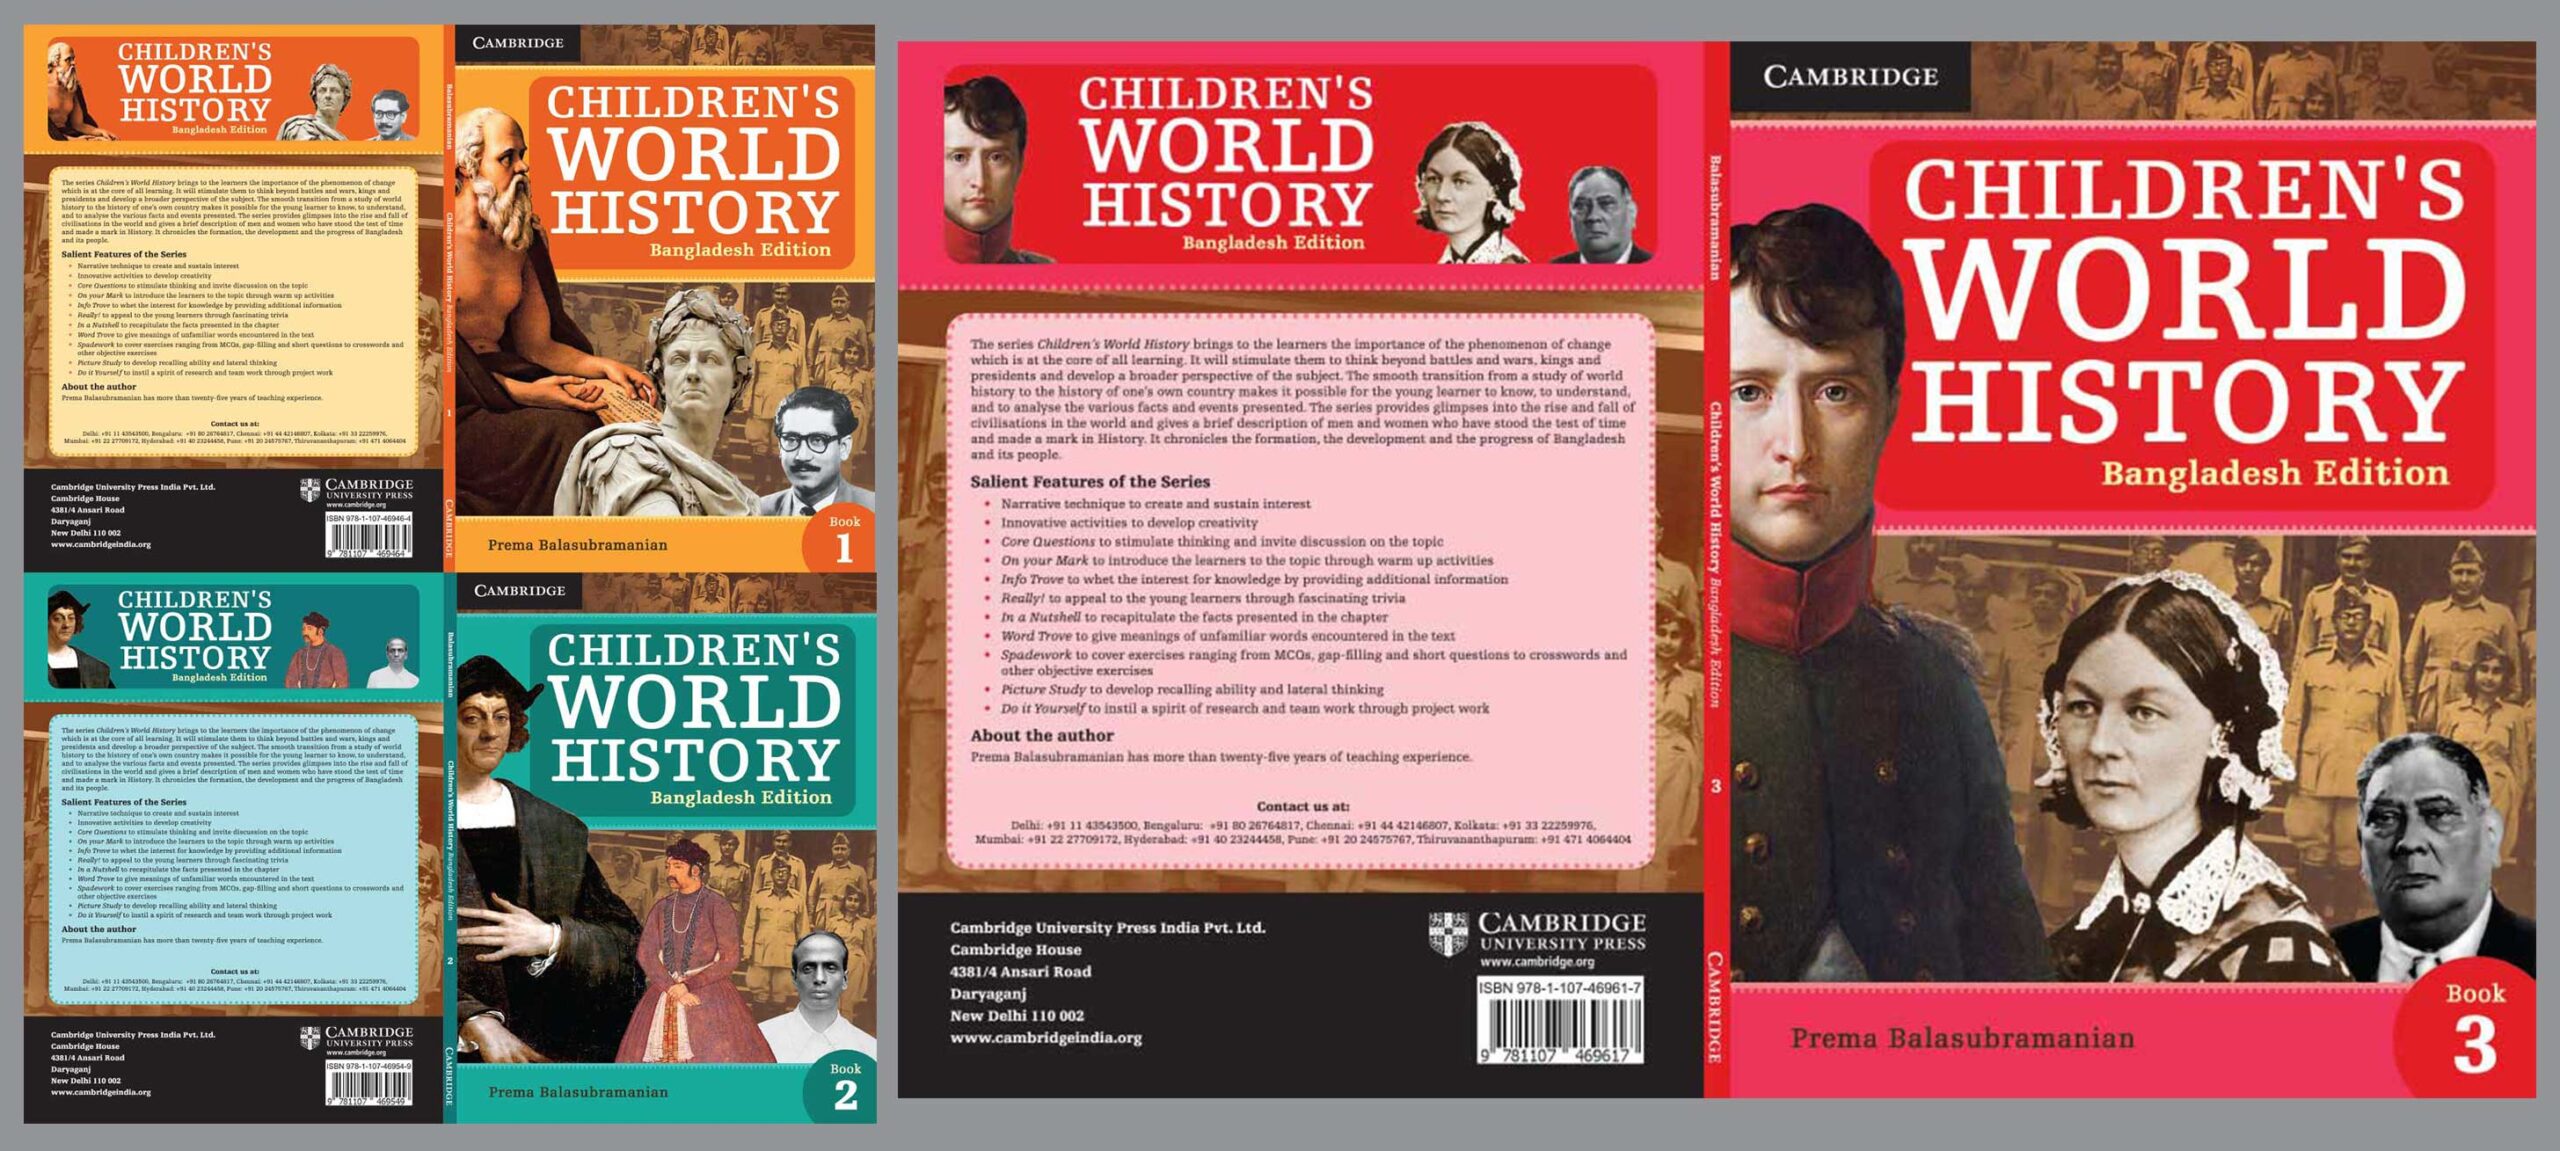 Cambridge Children's World History Bangladesh Edition